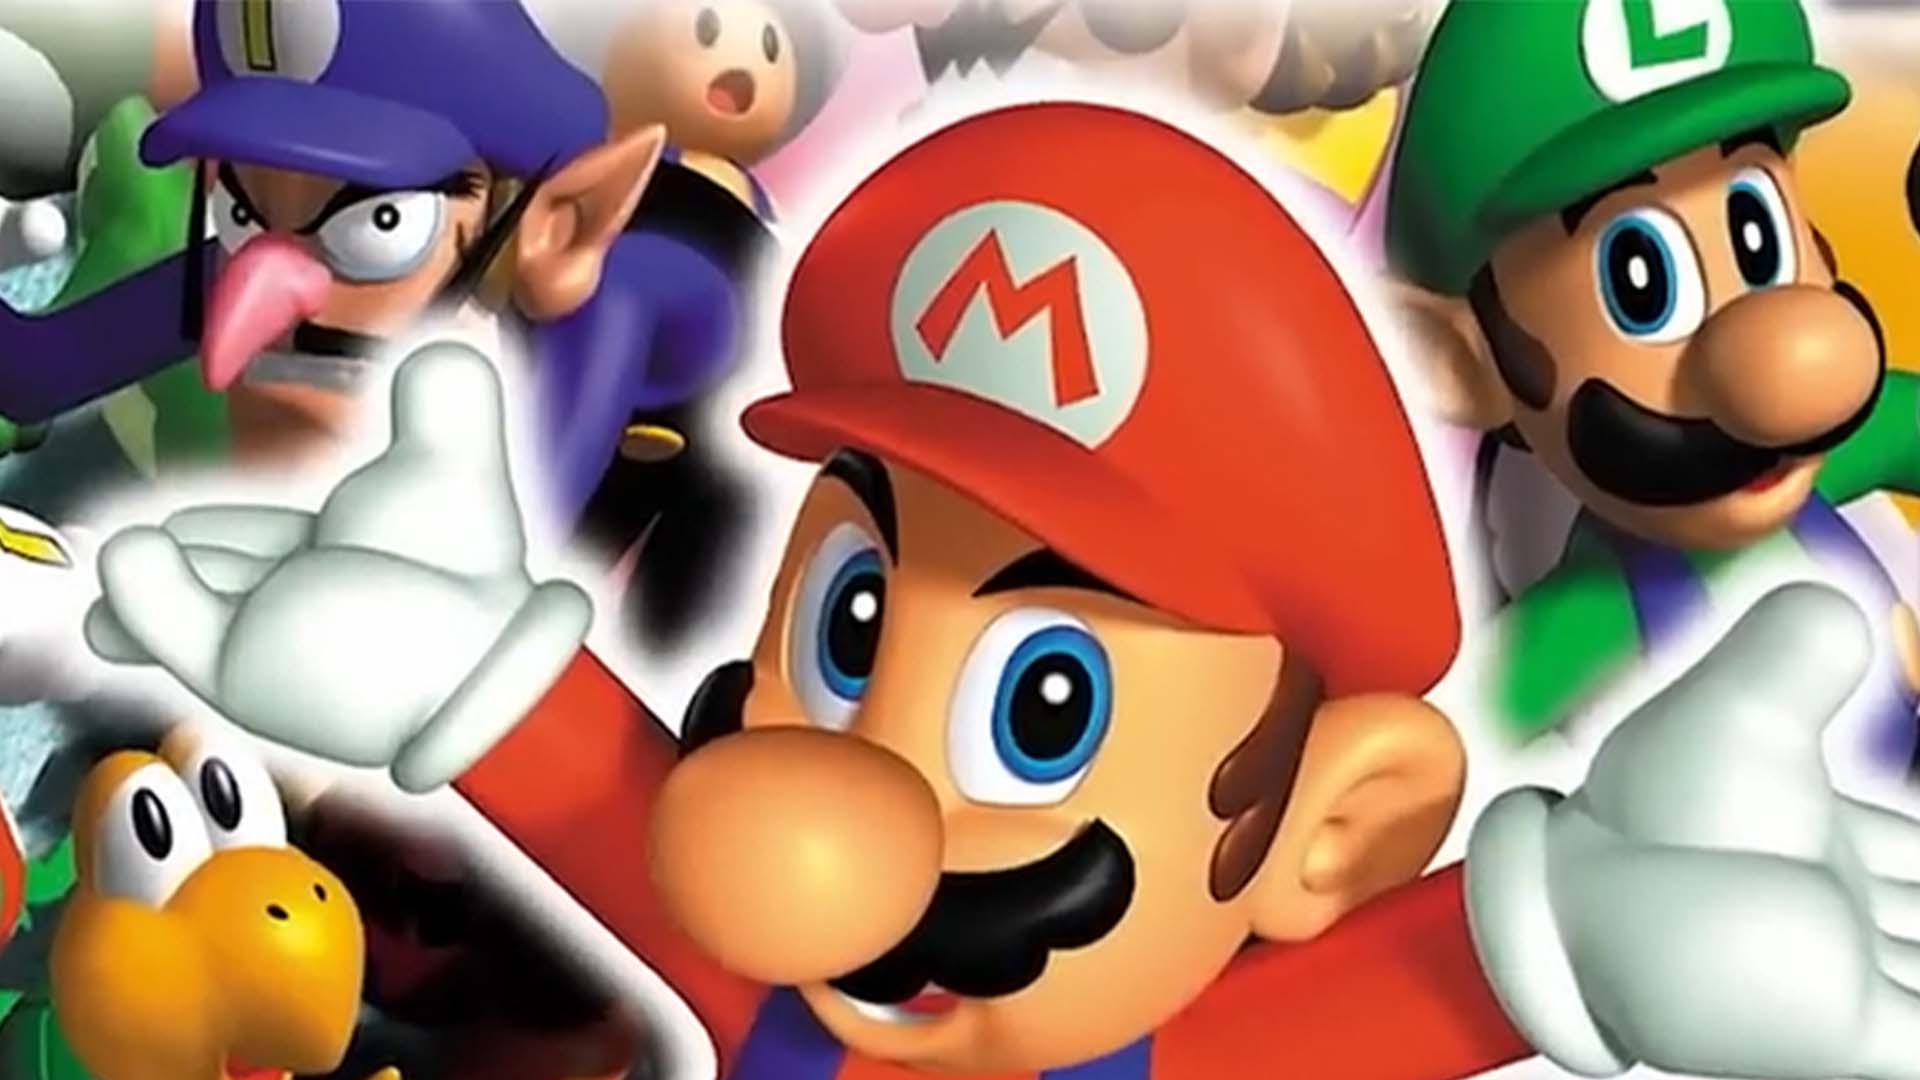 Buy Mario Party Superstars - Nintendo Switch online